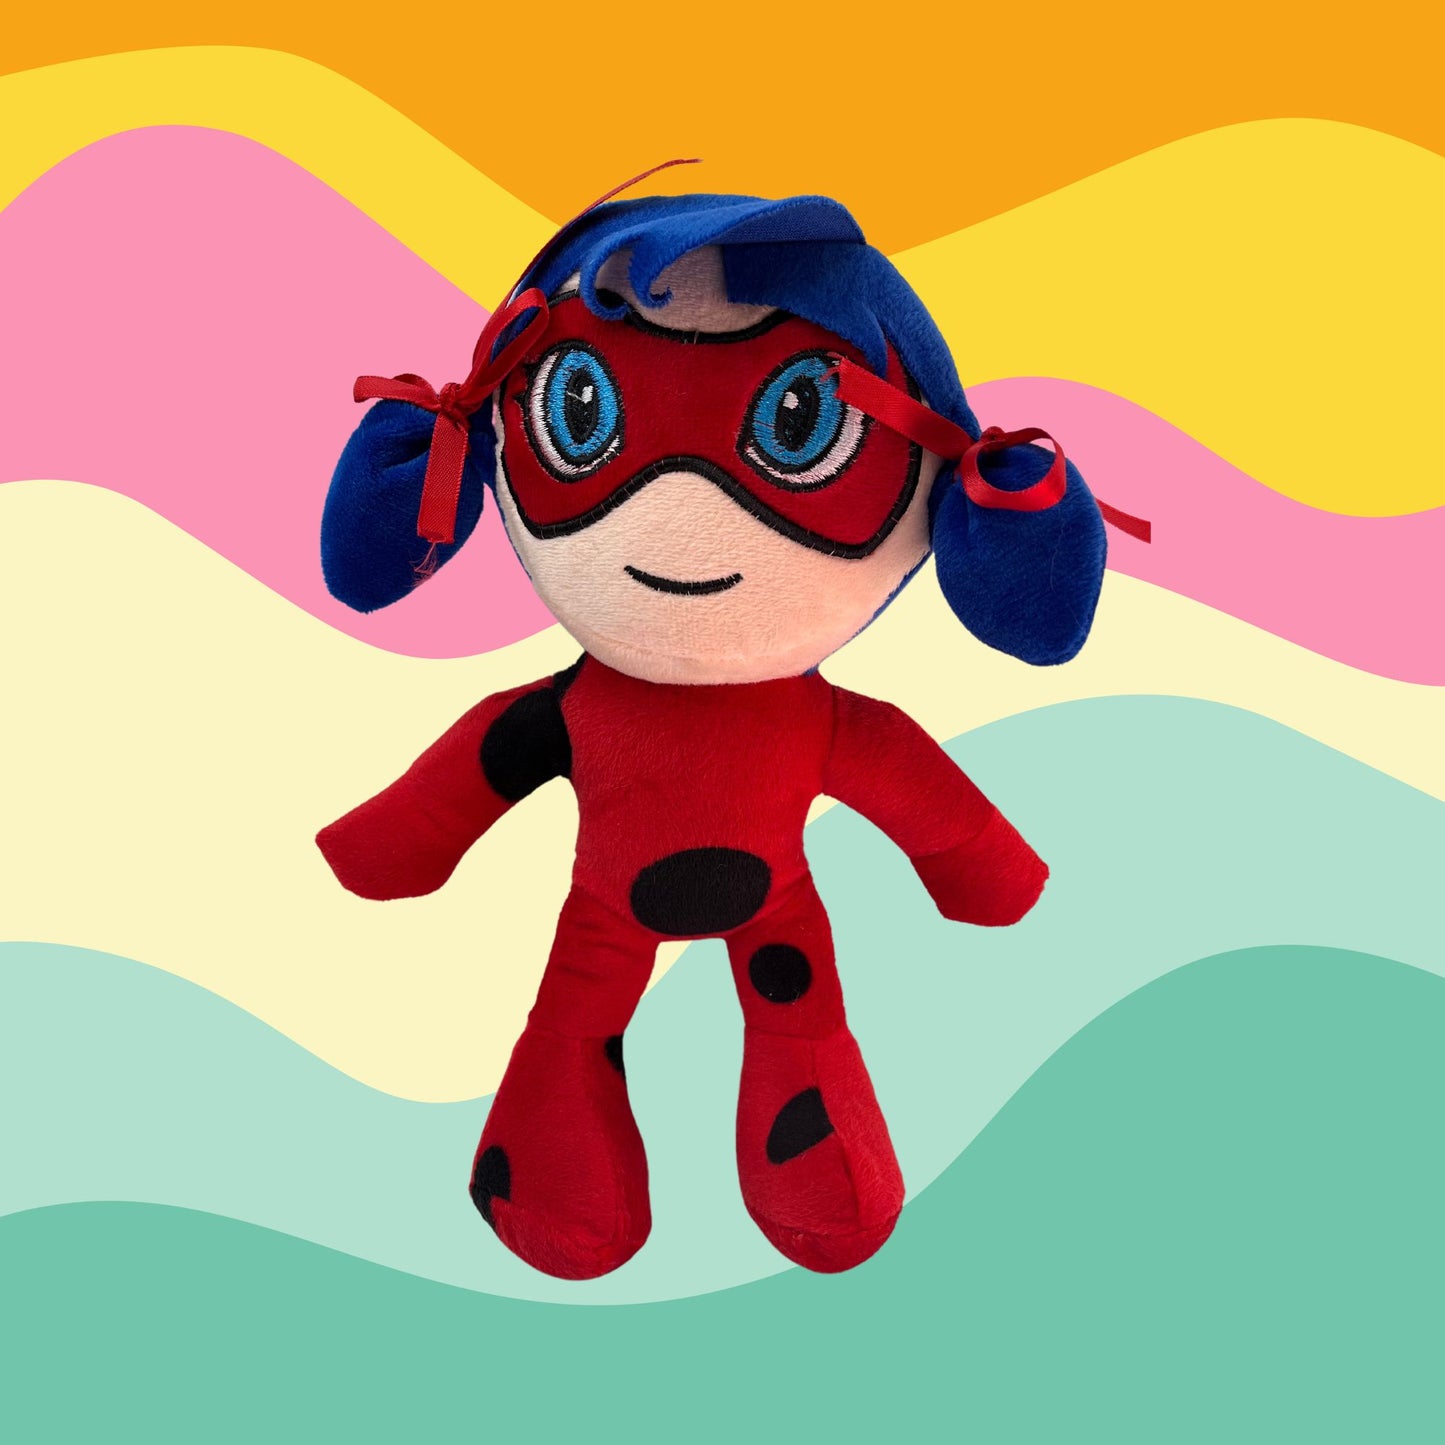 Ladybug Miraculous Kit Regalo Peluche Cariñoso + Taza Mágica Personalizada